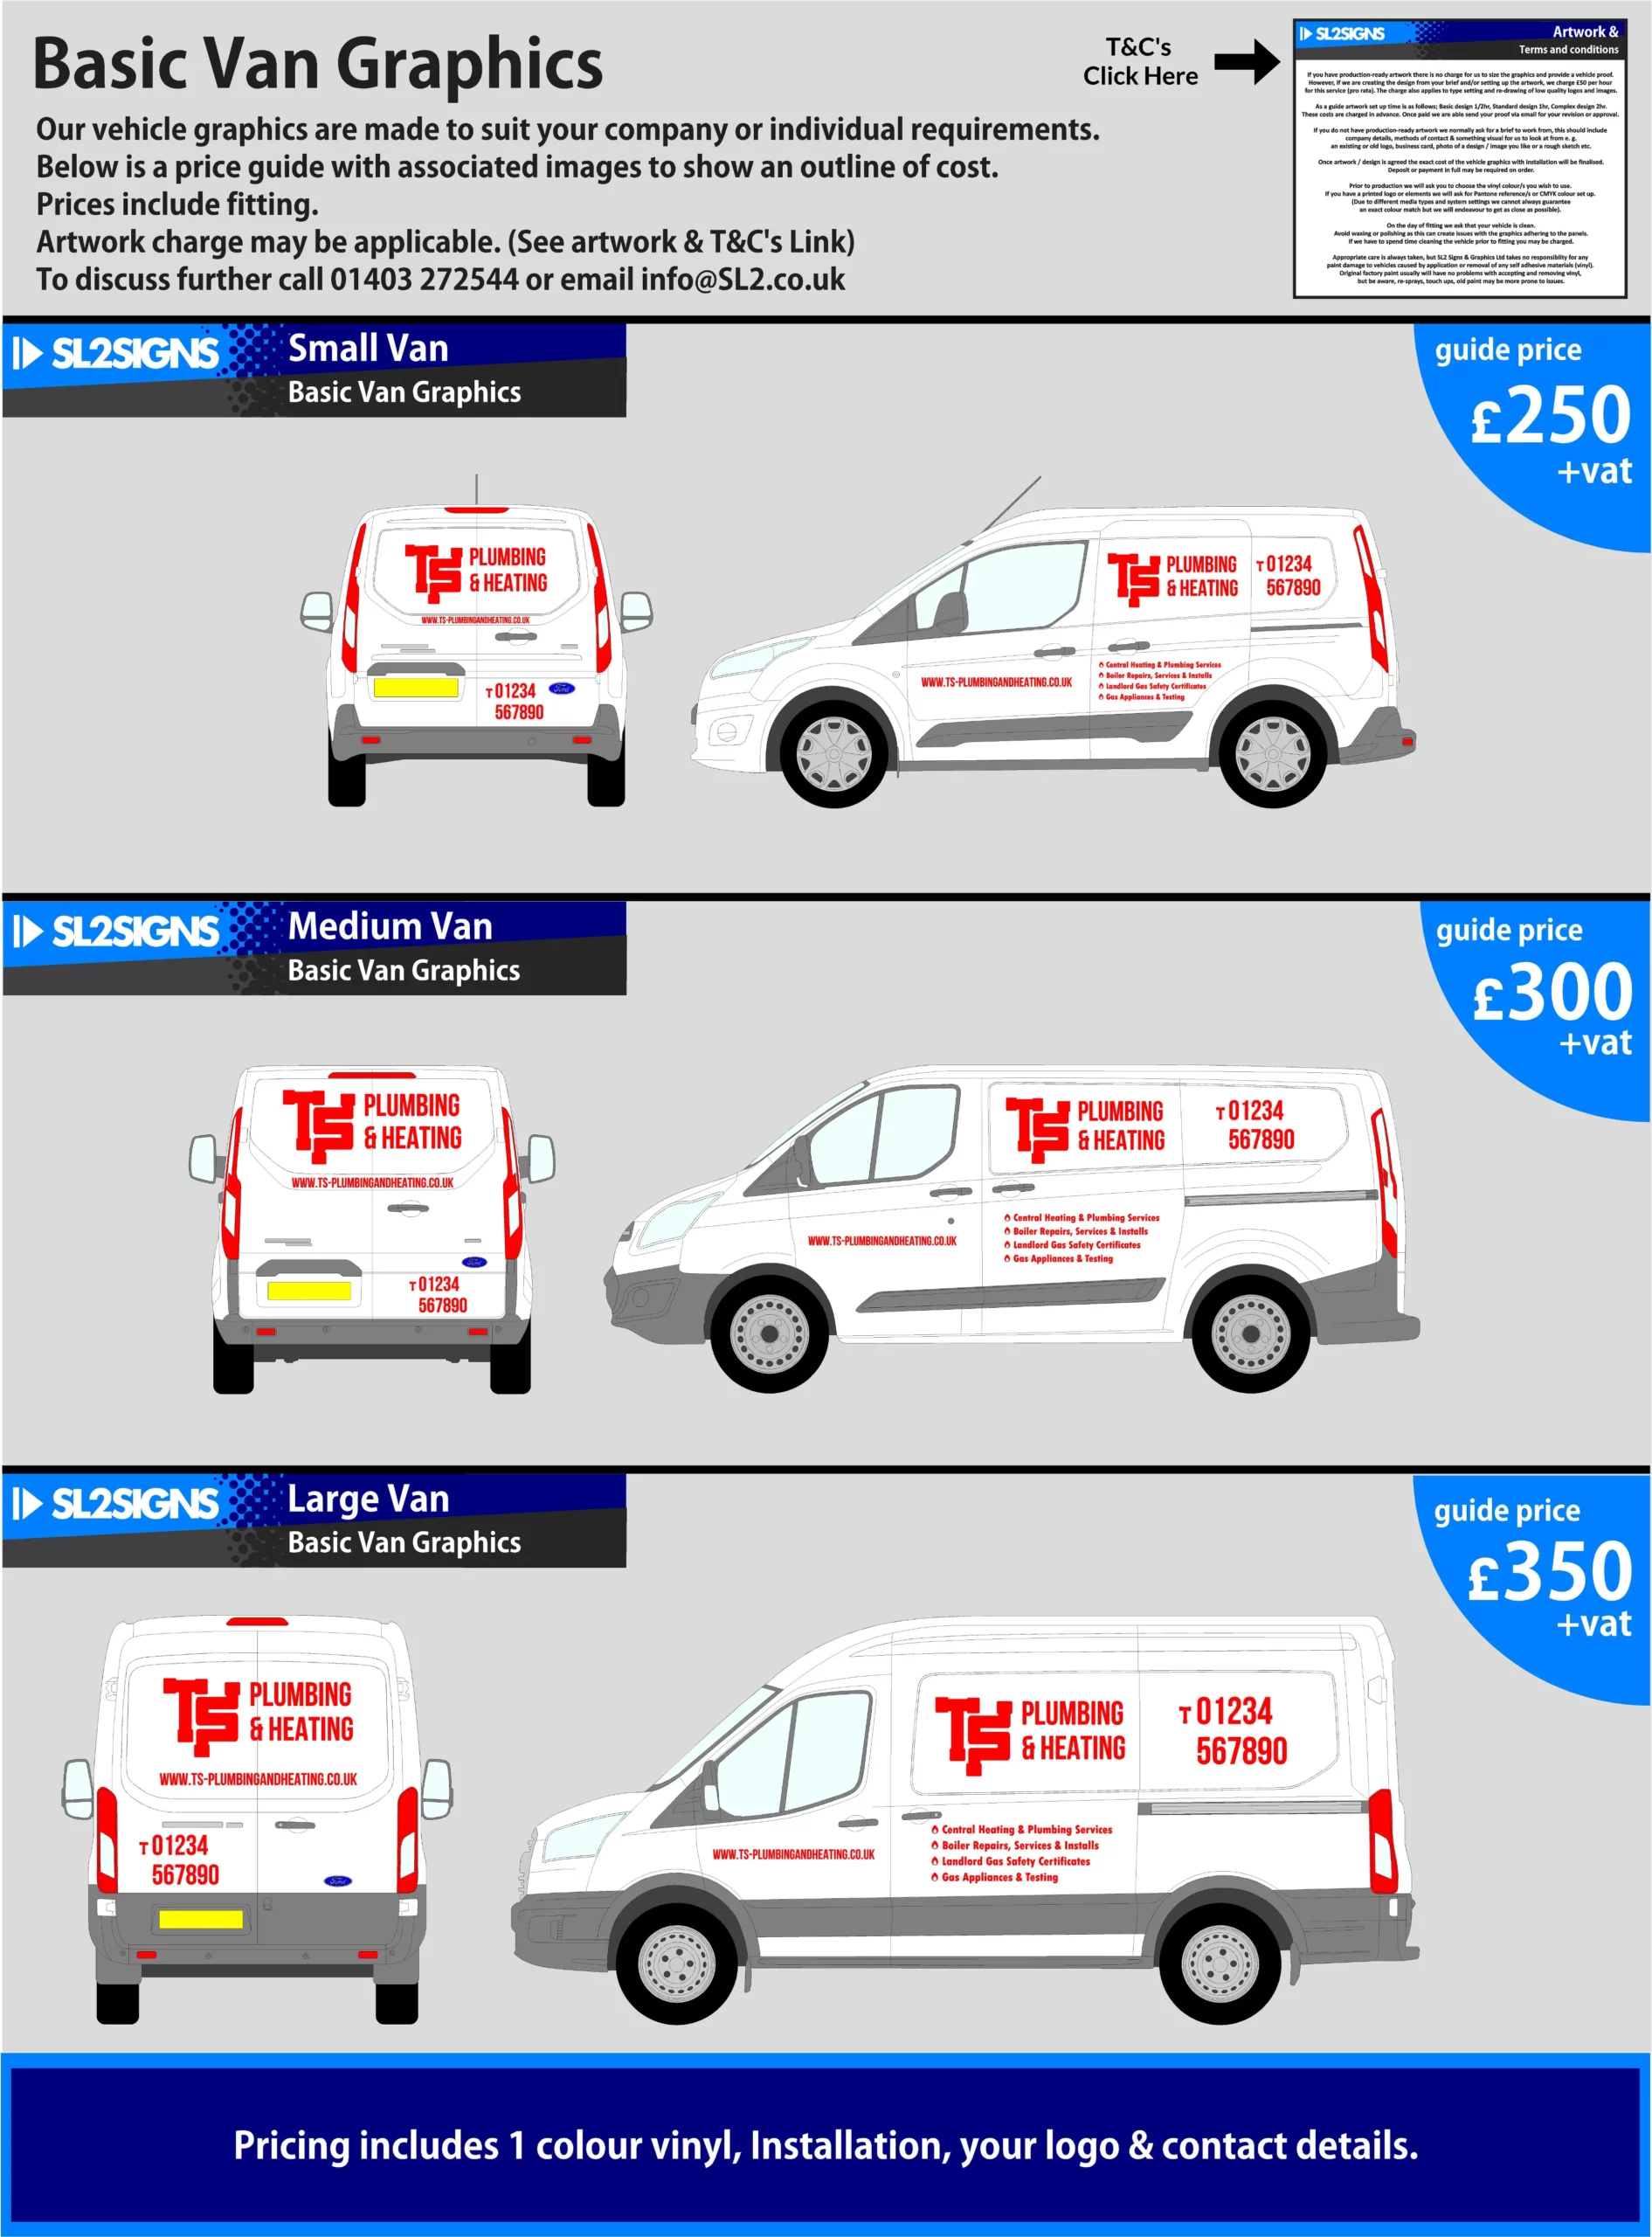 Basic van prices